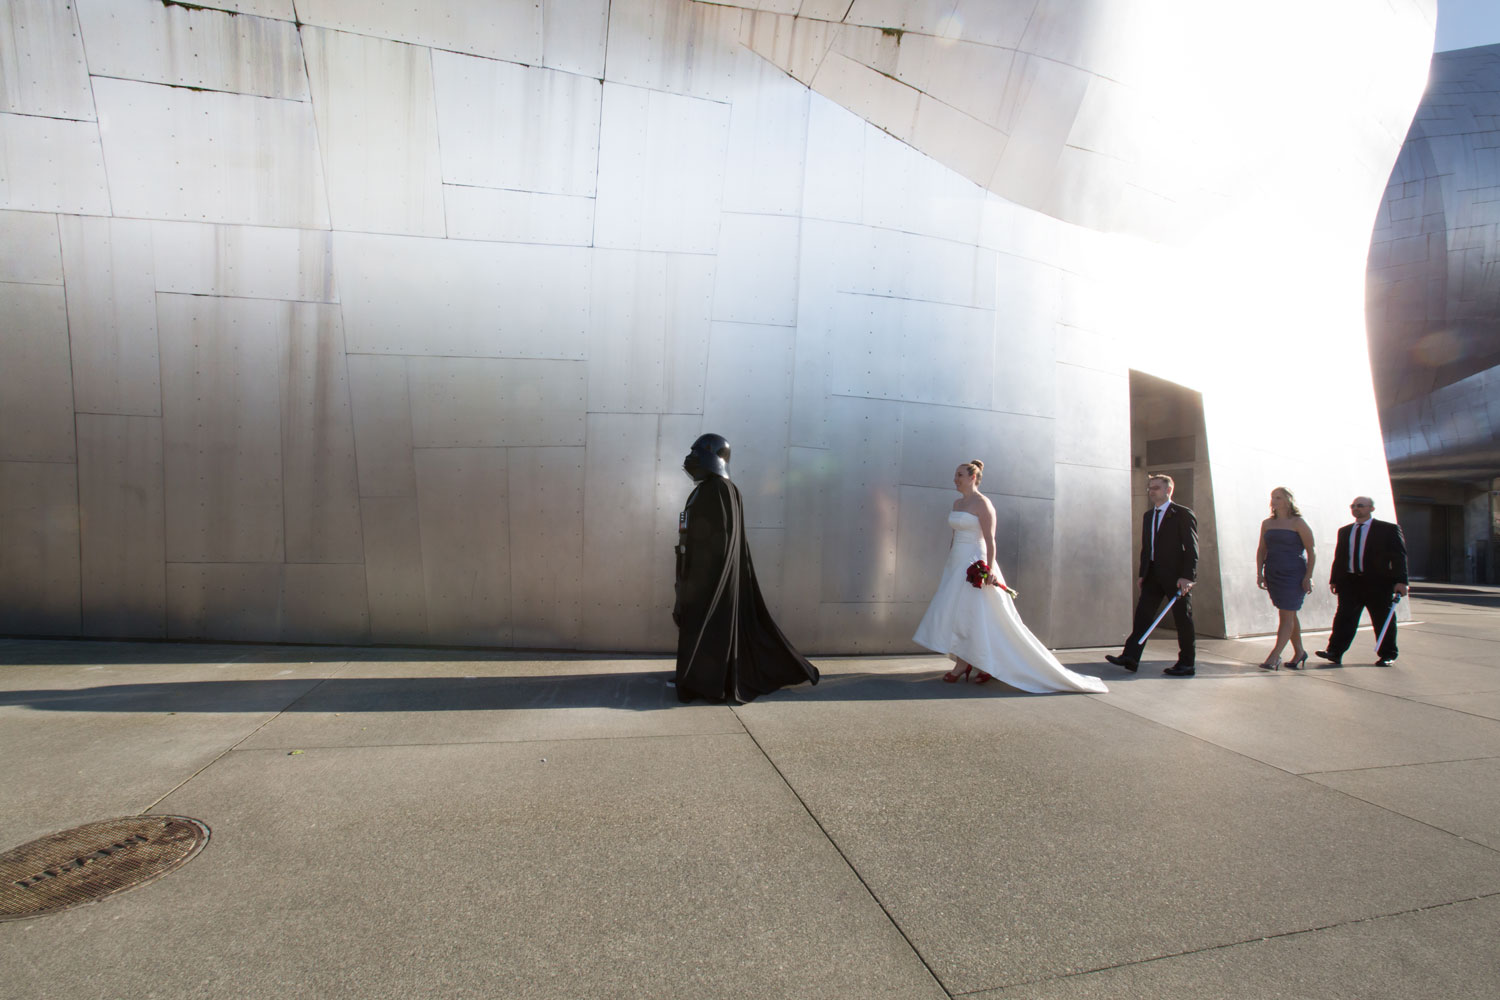 Photograph of Star Wars Themed Wedding